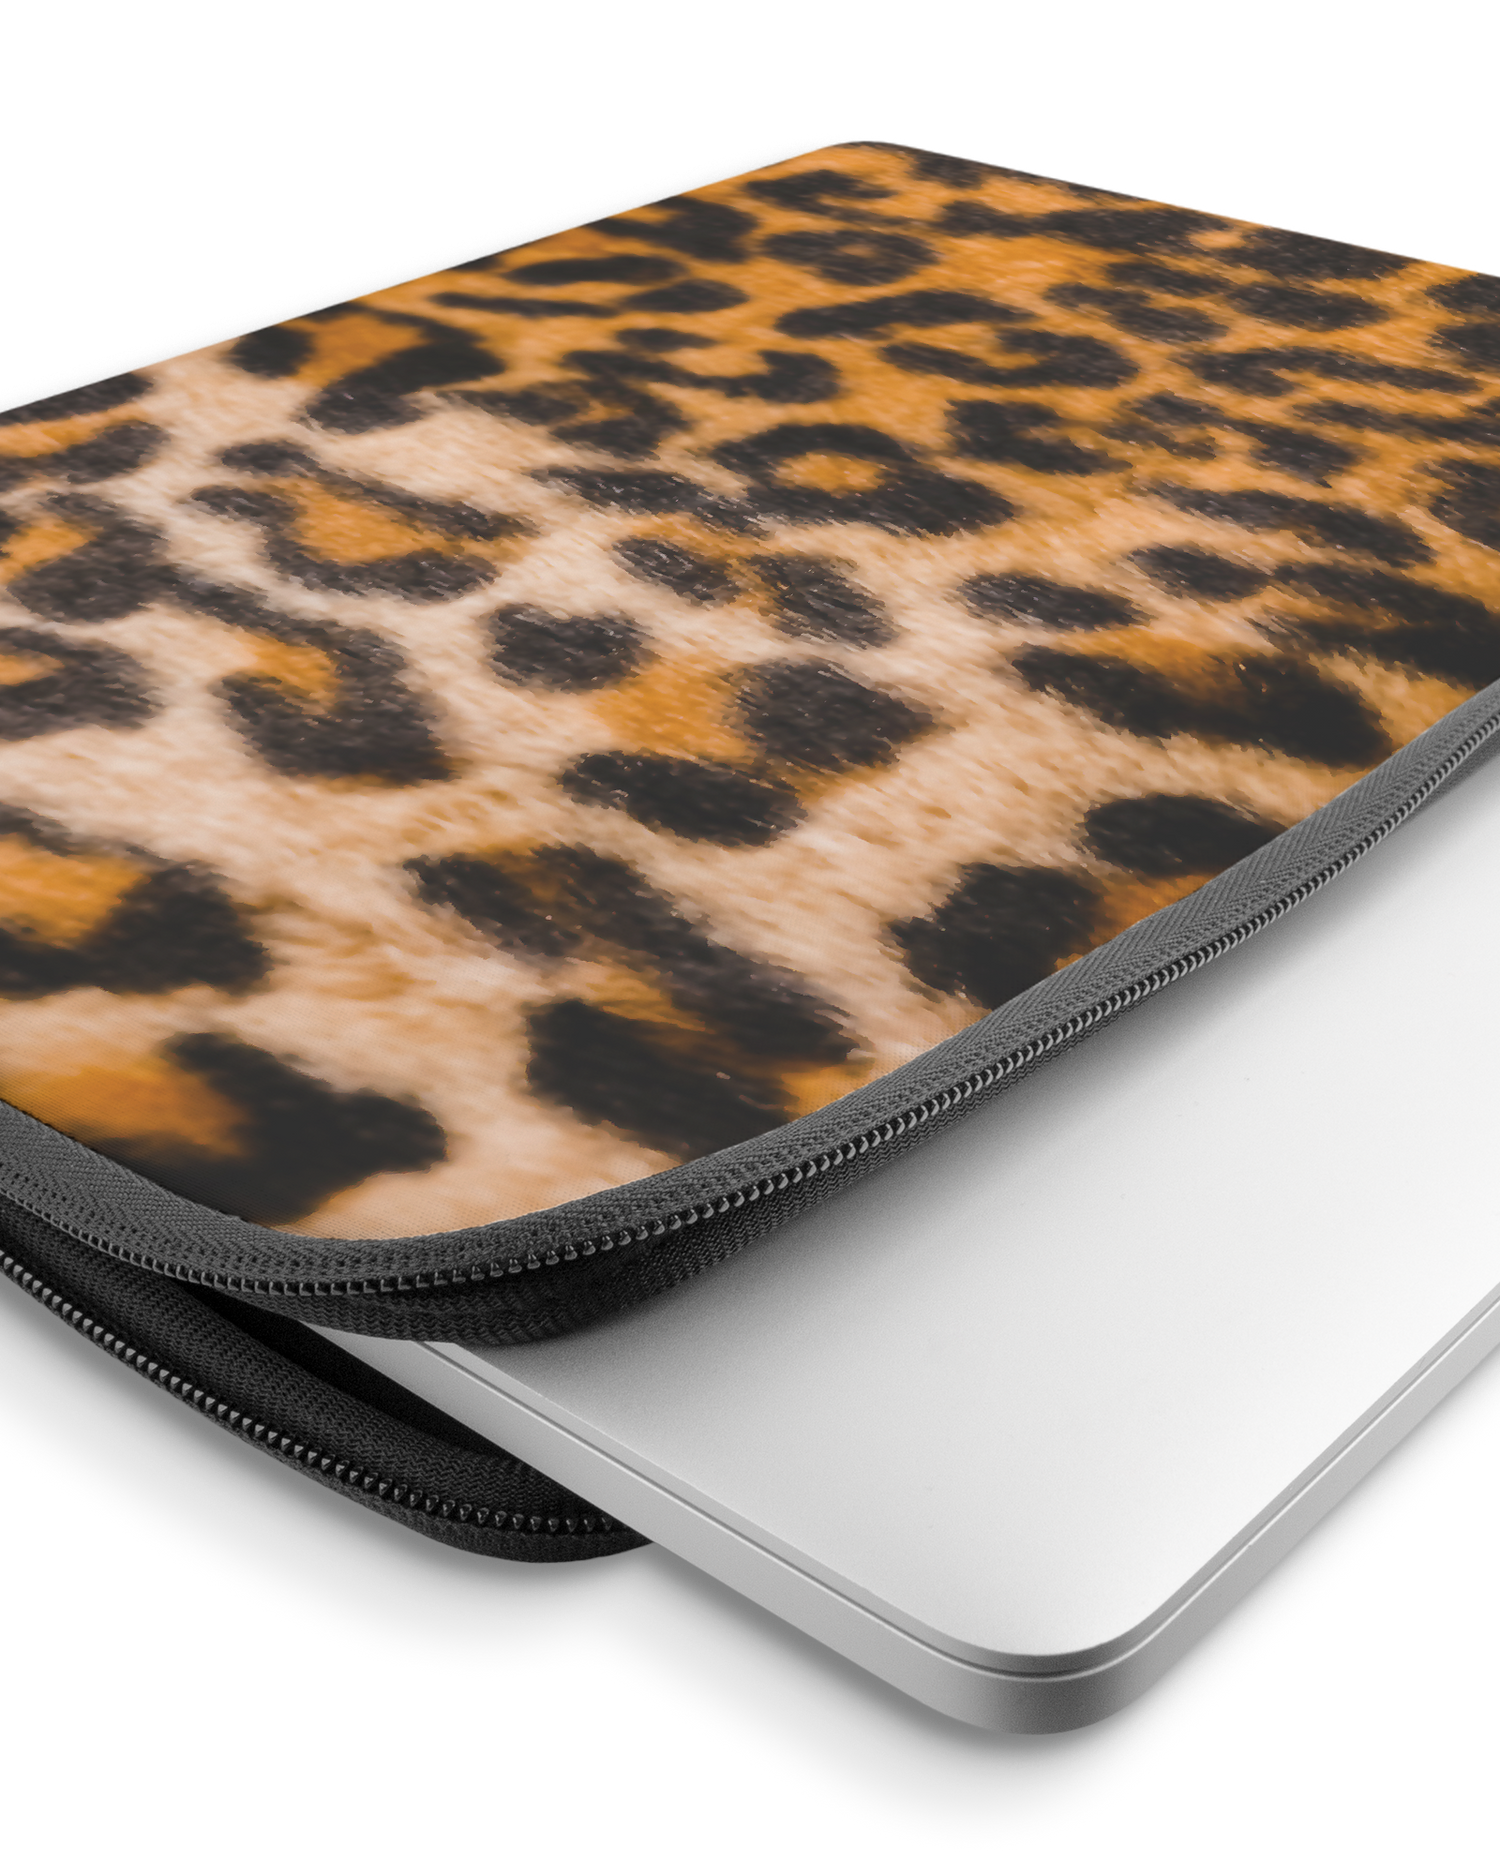 Leopard Pattern Laptop Case 15-16 inch with device inside